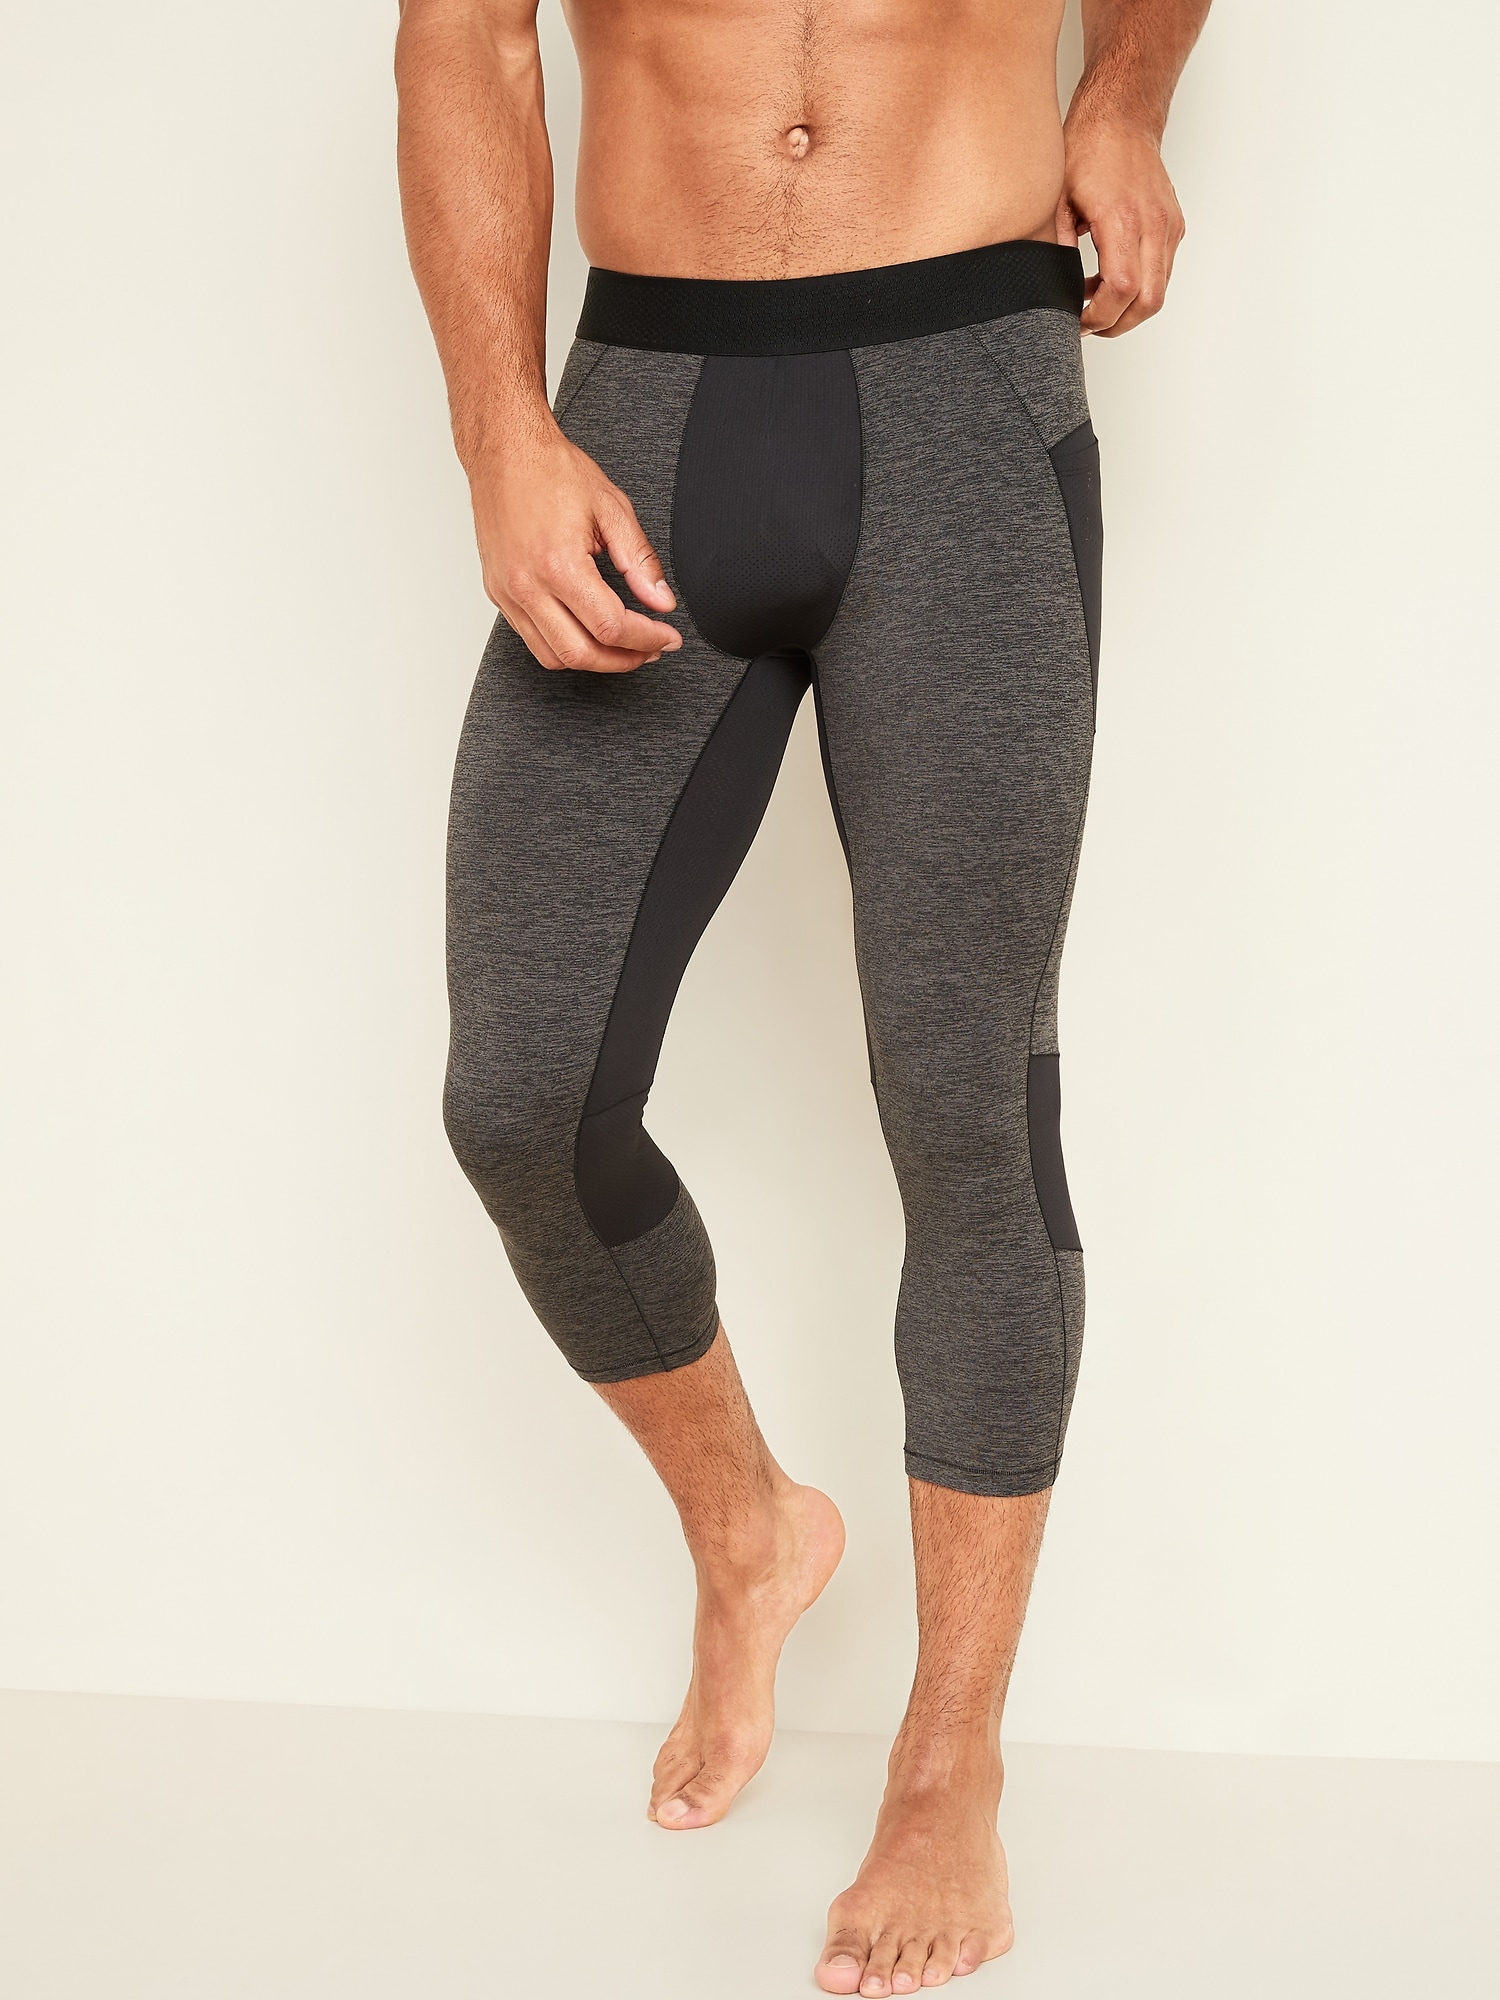 ET TU High Waisted Fleece 3/4 Leggings Women's Yoga Pants Activewear | eBay